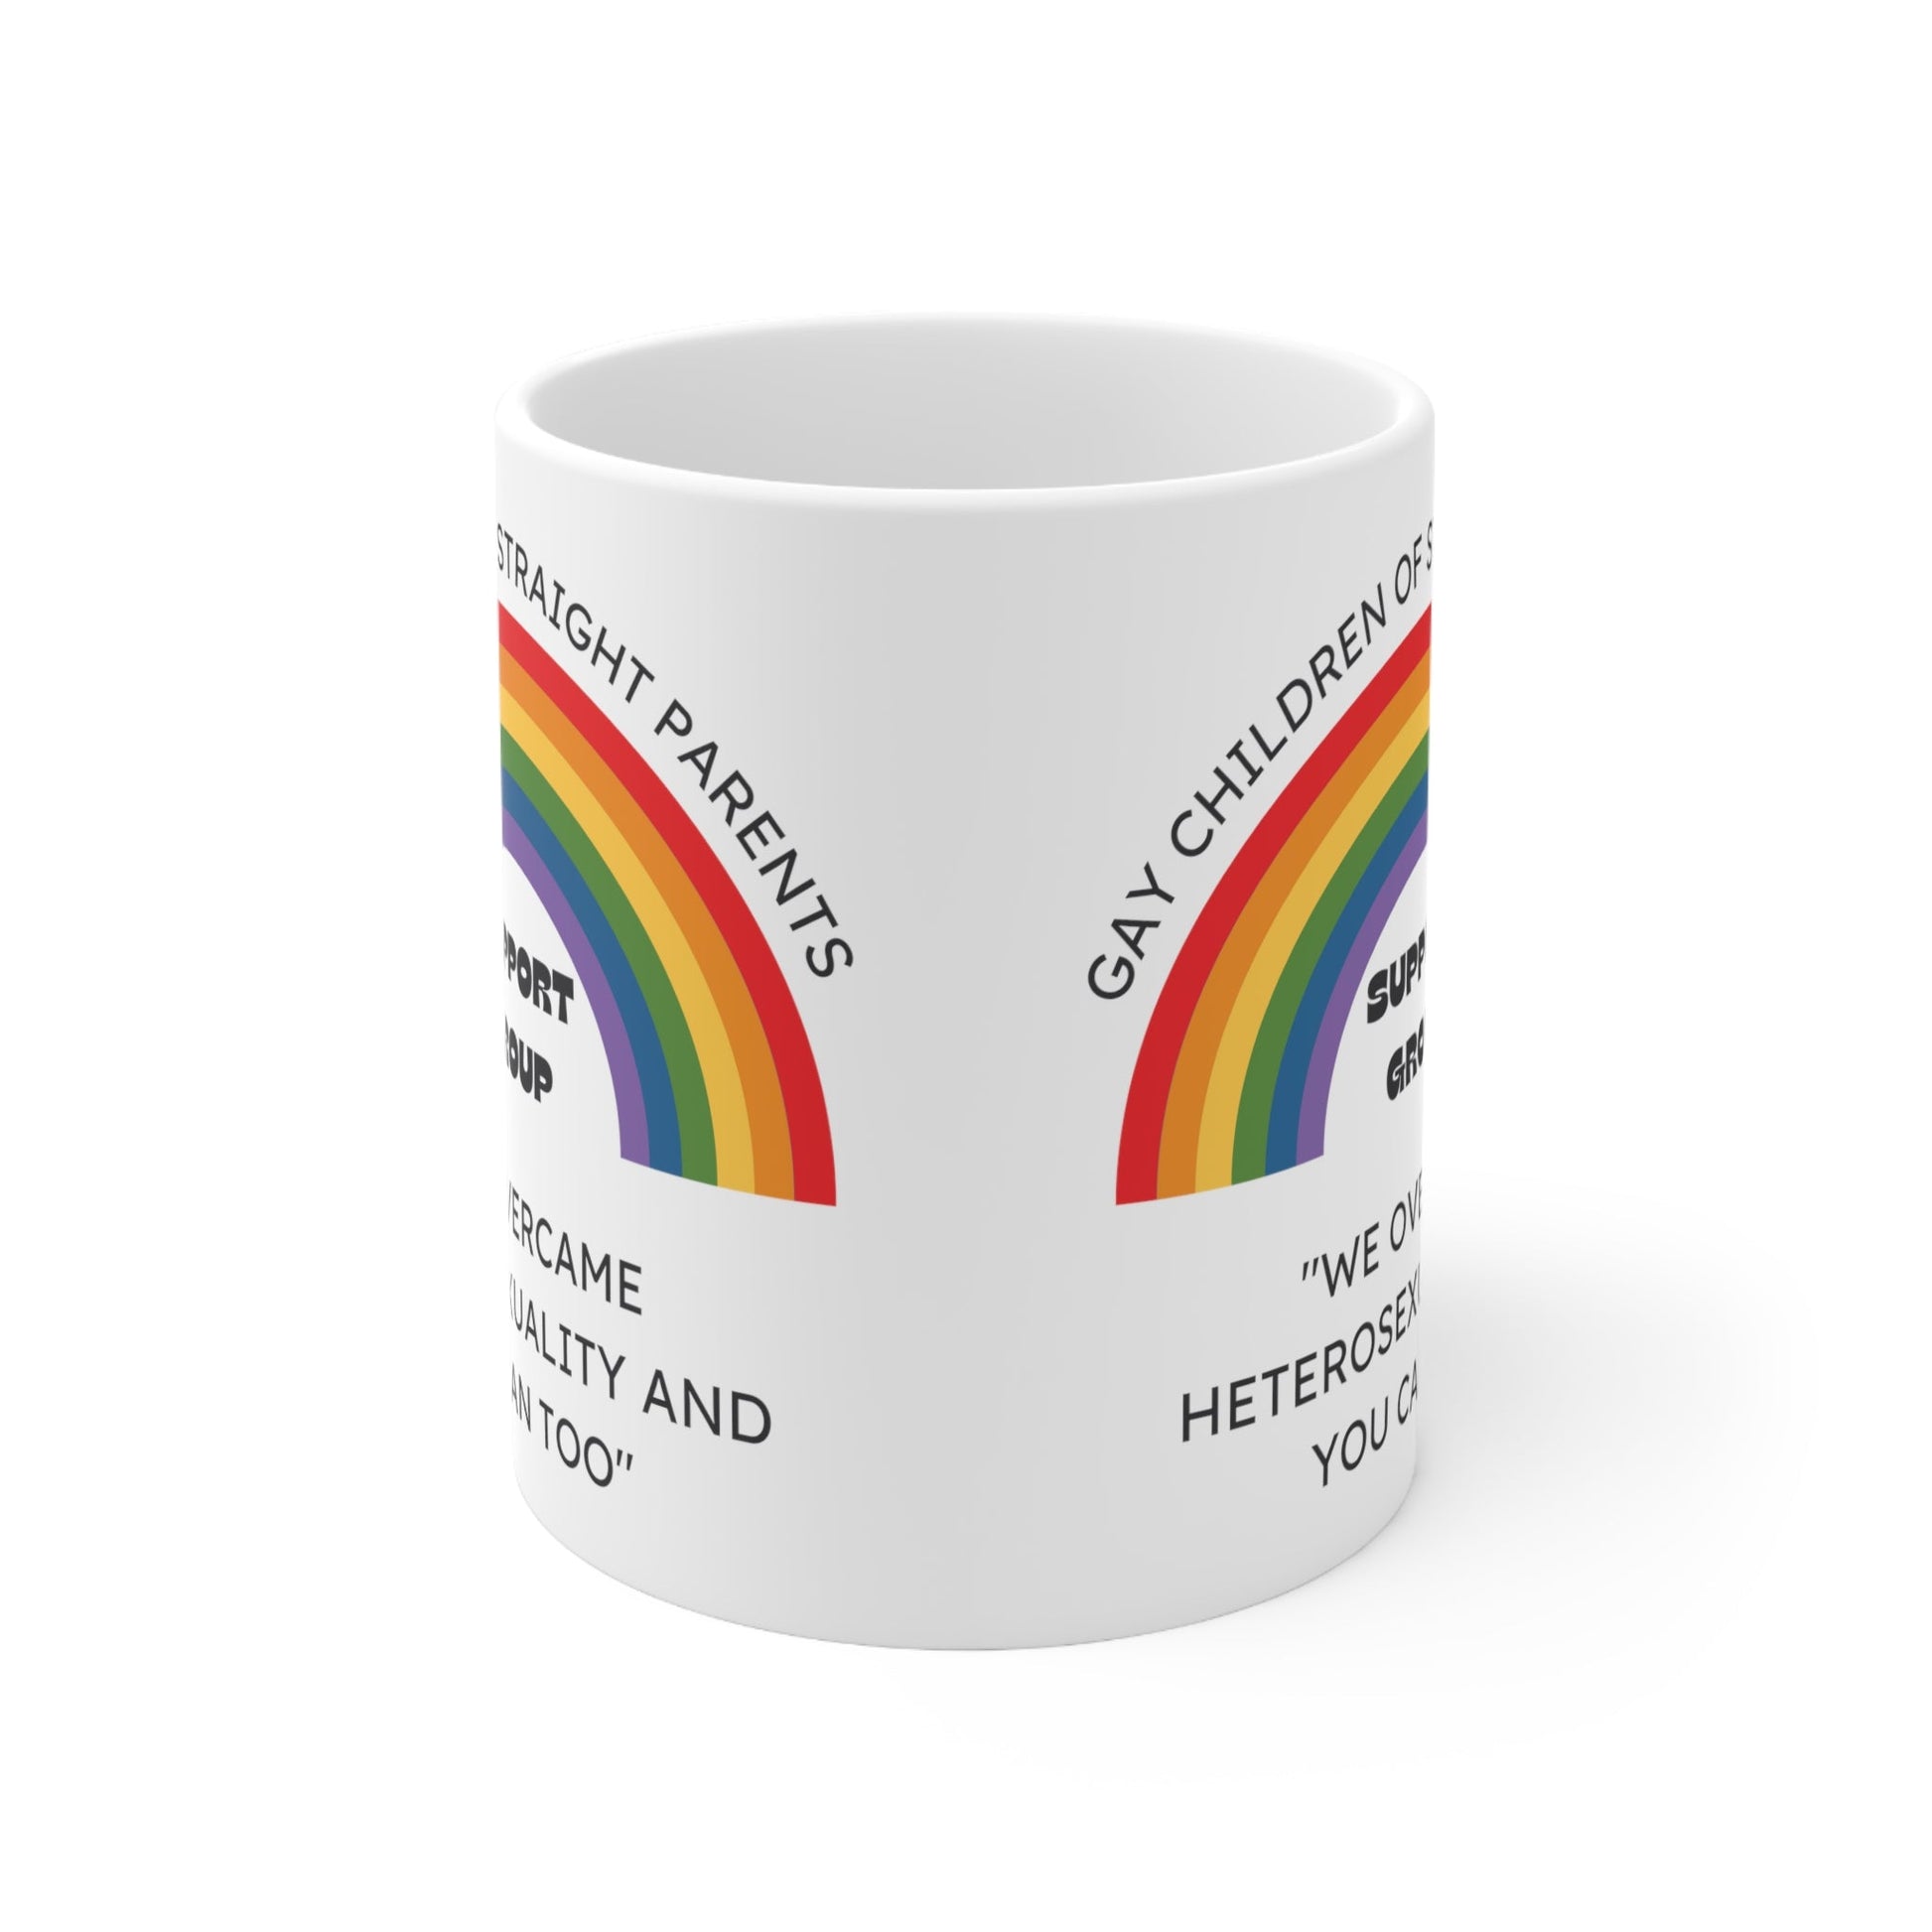 Gay Children of Straight Parents Support Group Ceramic Mug 11oz